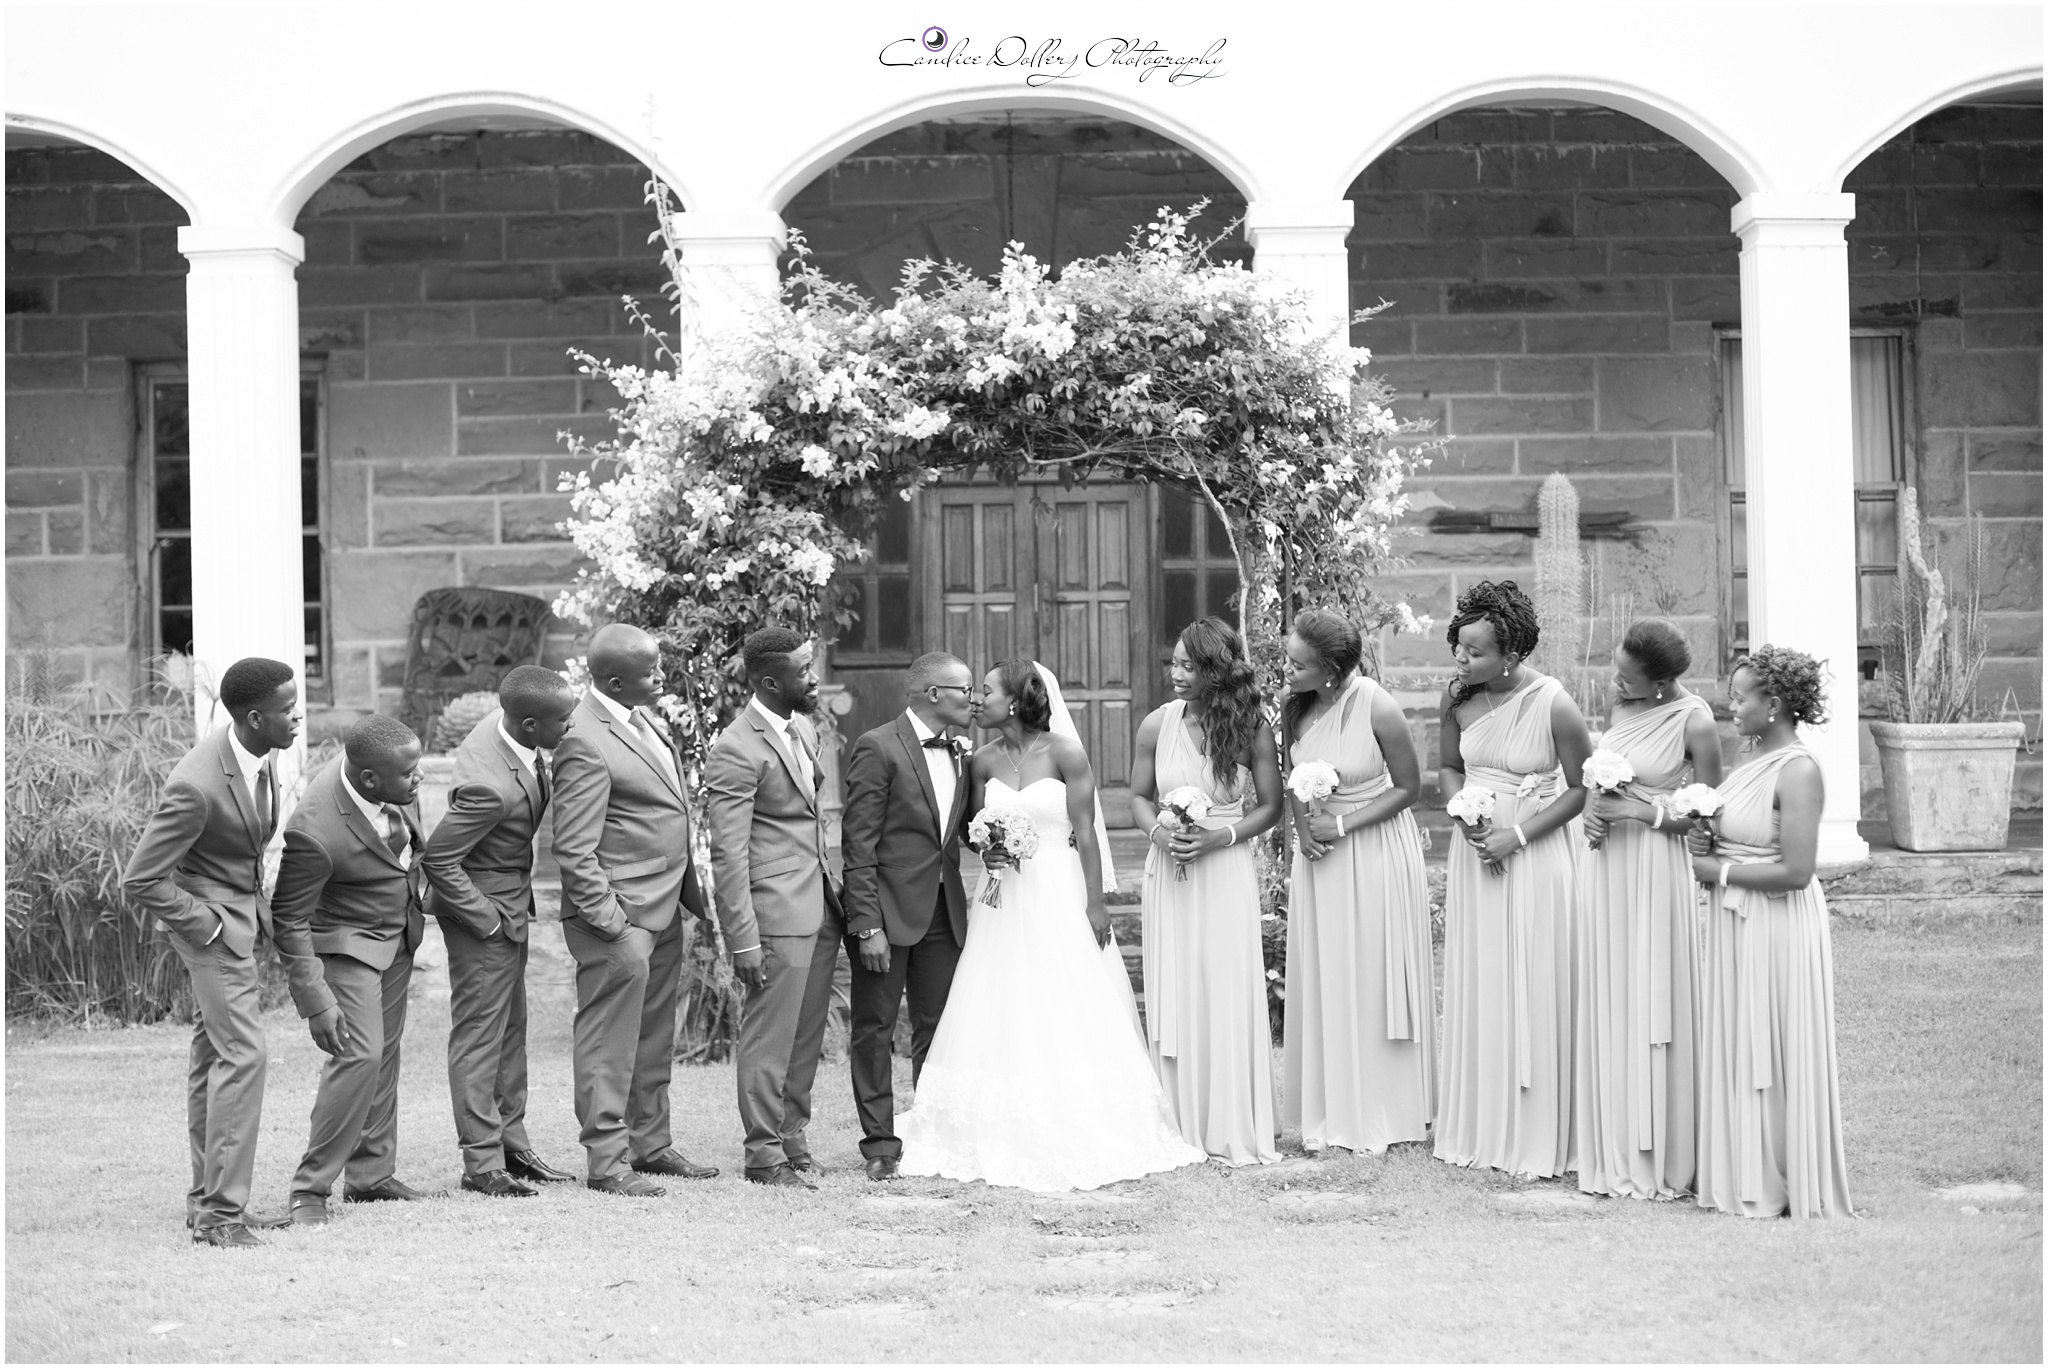 Reuben & Antoinette's Wedding - Candice Dollery Photography_7900